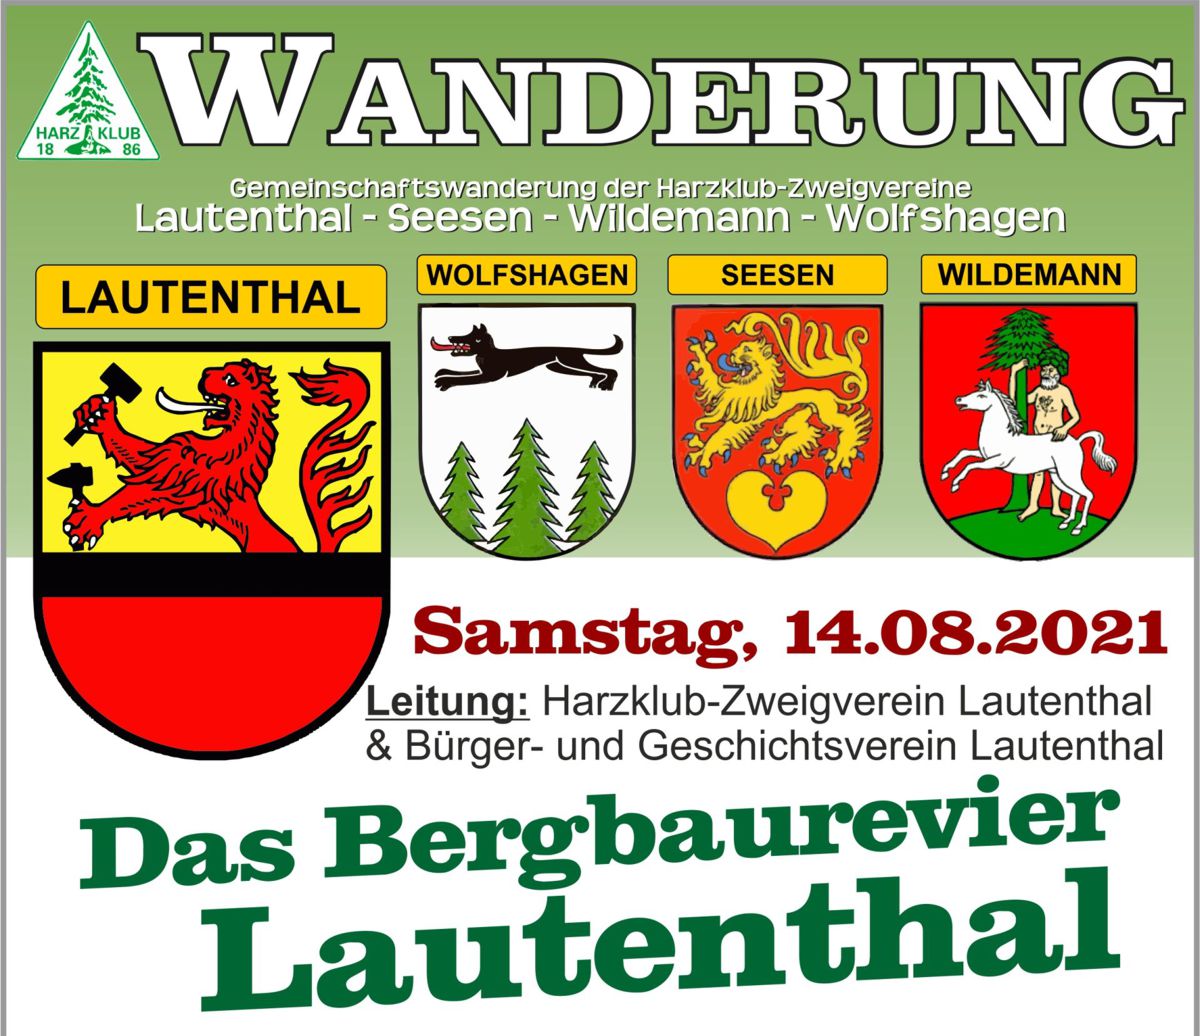 Wanderung Harzklub Lautenthal